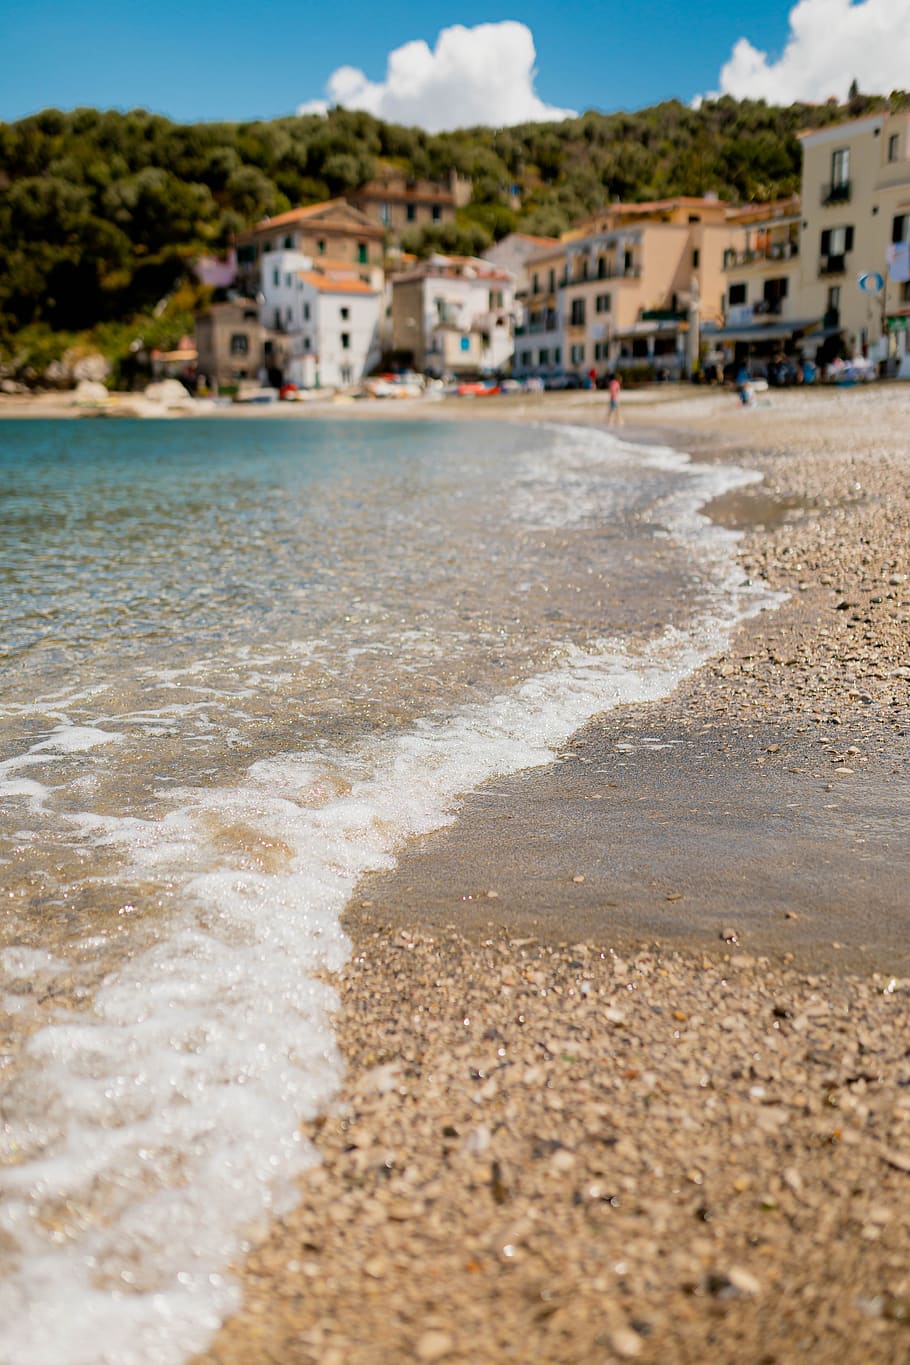 Italy, marina di puolo, beach, italia, włochy, seaside, sea, mediterranean, waterscape, Europe